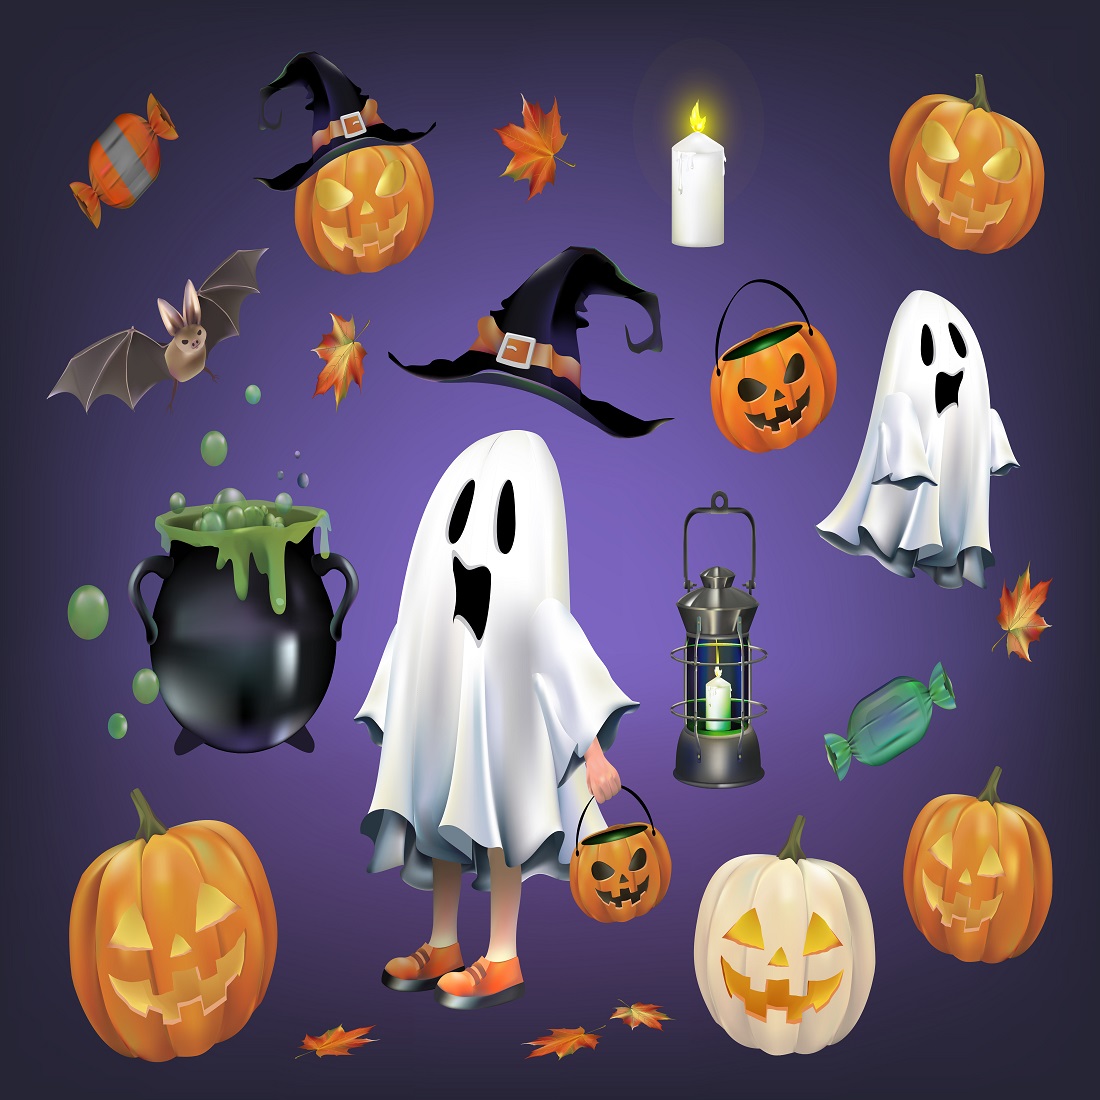 Halloween set cover image.